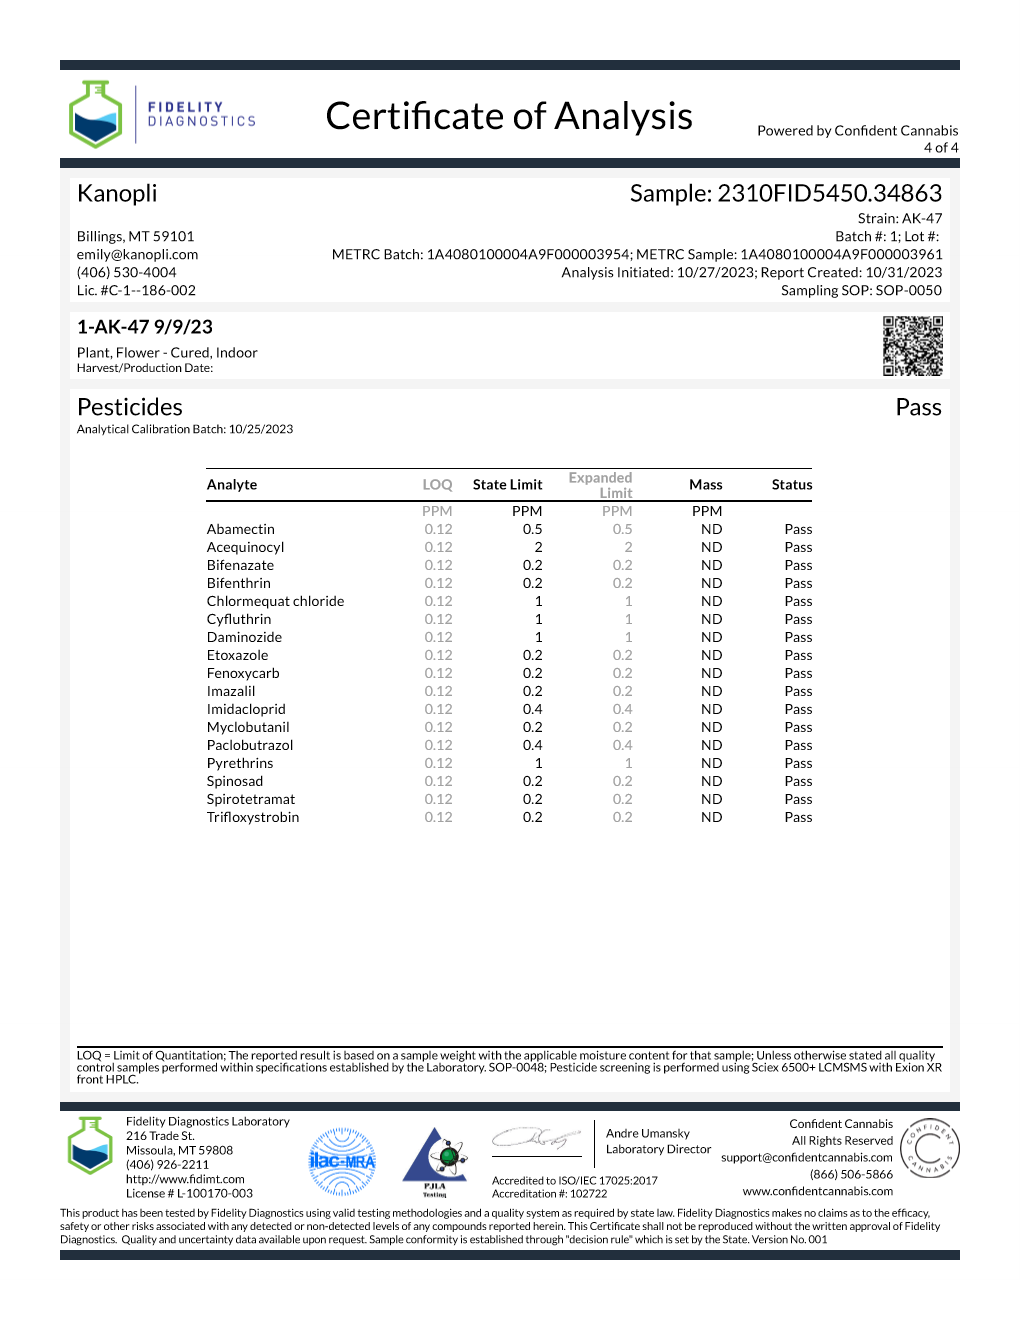 Adult Use - AK-47 - Sativa 29.90% THC (Sept. 2023)